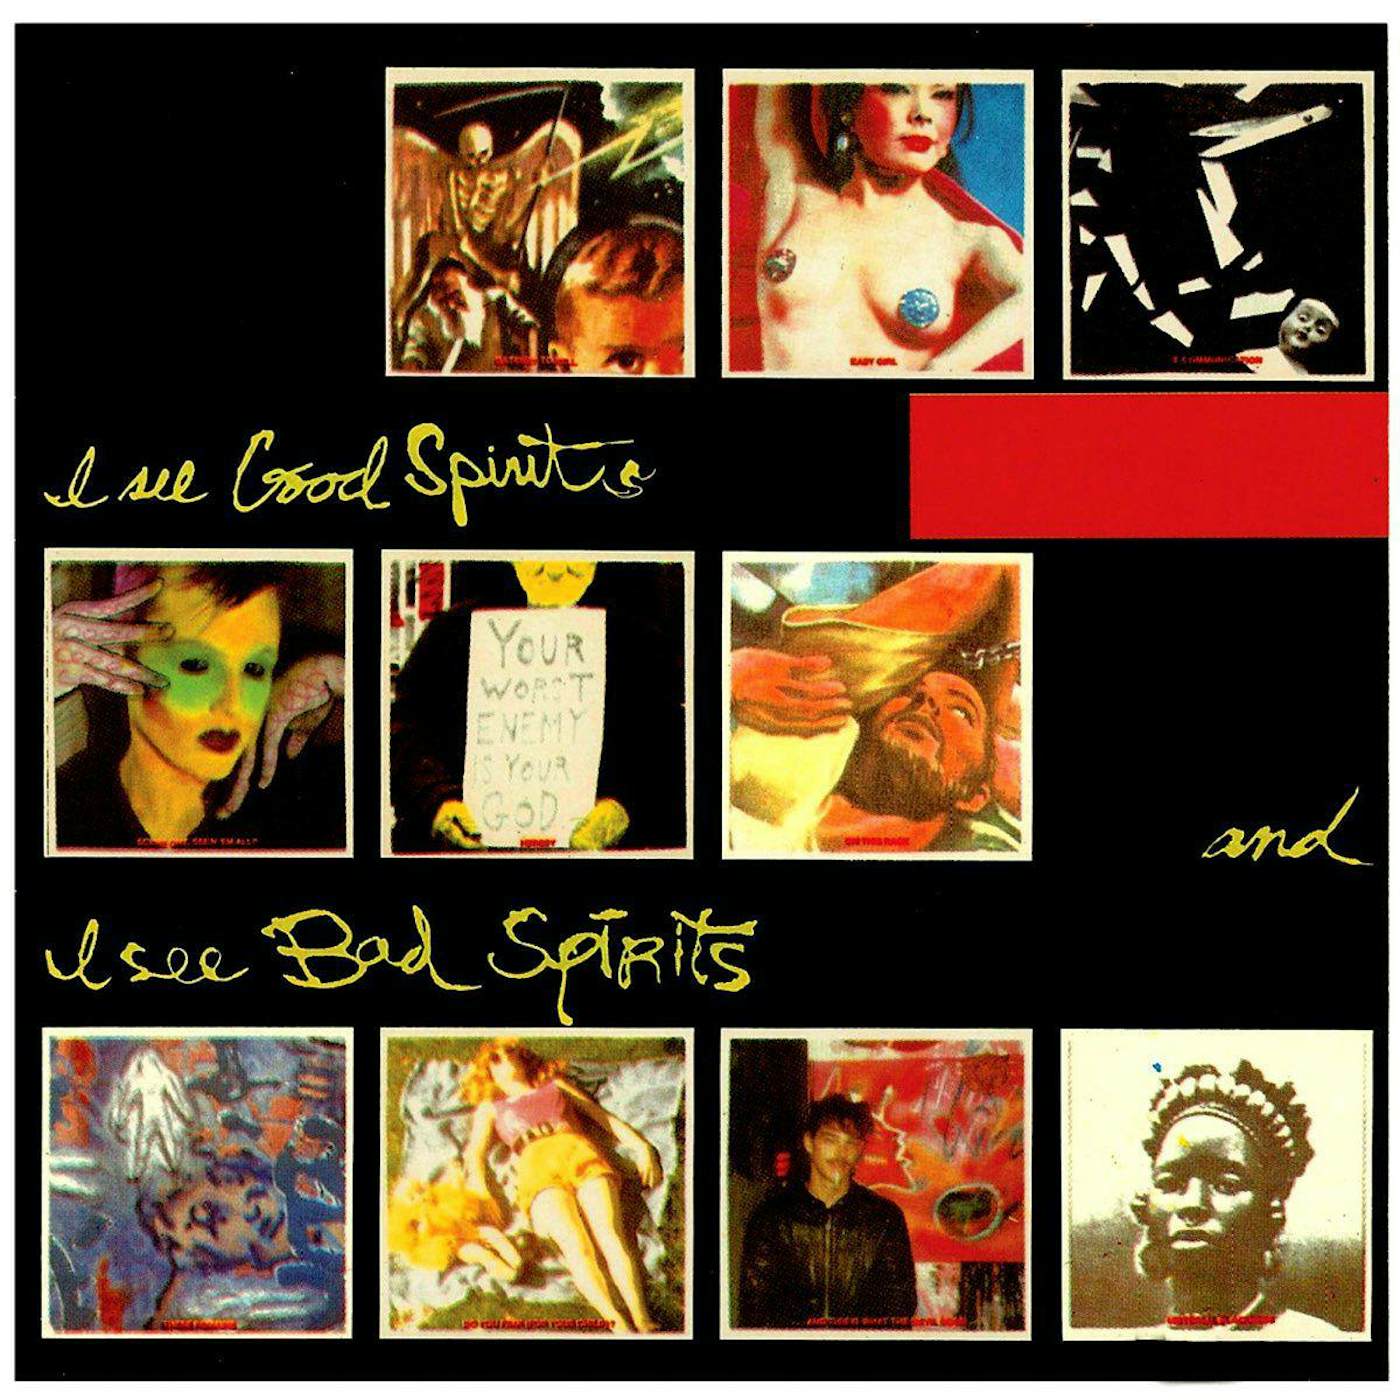 My Life With The Thrill Kill Kult I See Good Spirits & I See Bad Spirits (AMS Exclusive) Vinyl Record